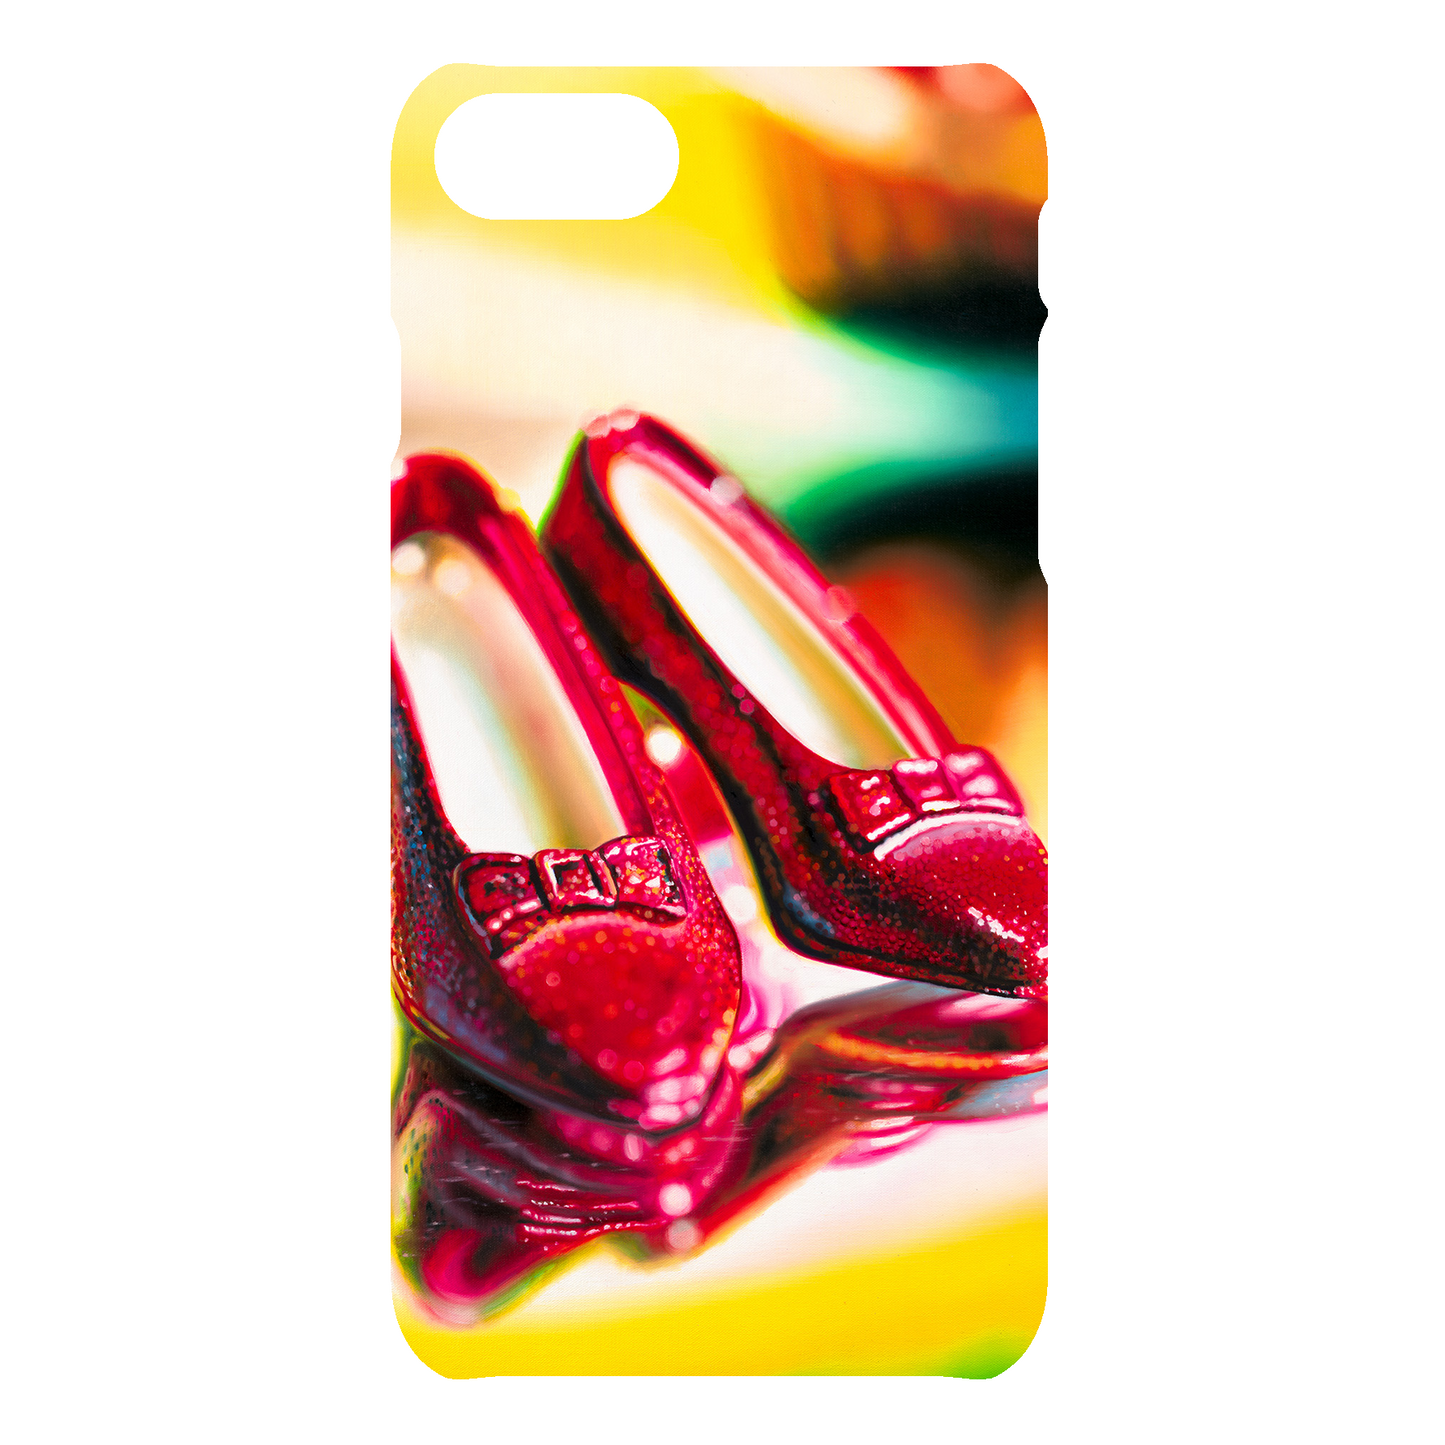 Ruby Slippers Snap Phone Case - alternative phone models